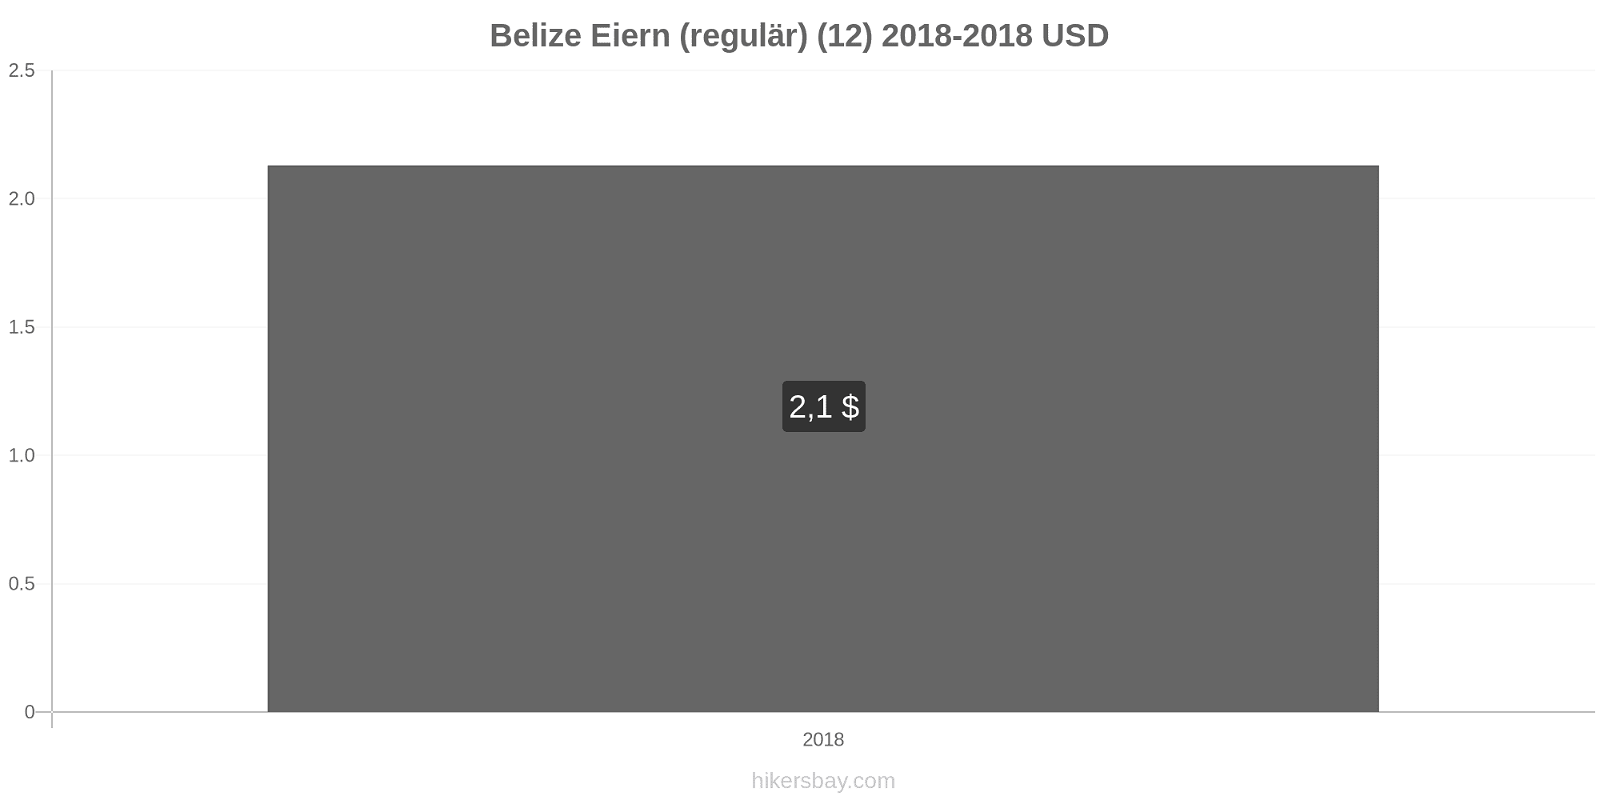 Belize Preisänderungen Eier (regelmäßig) (12) hikersbay.com